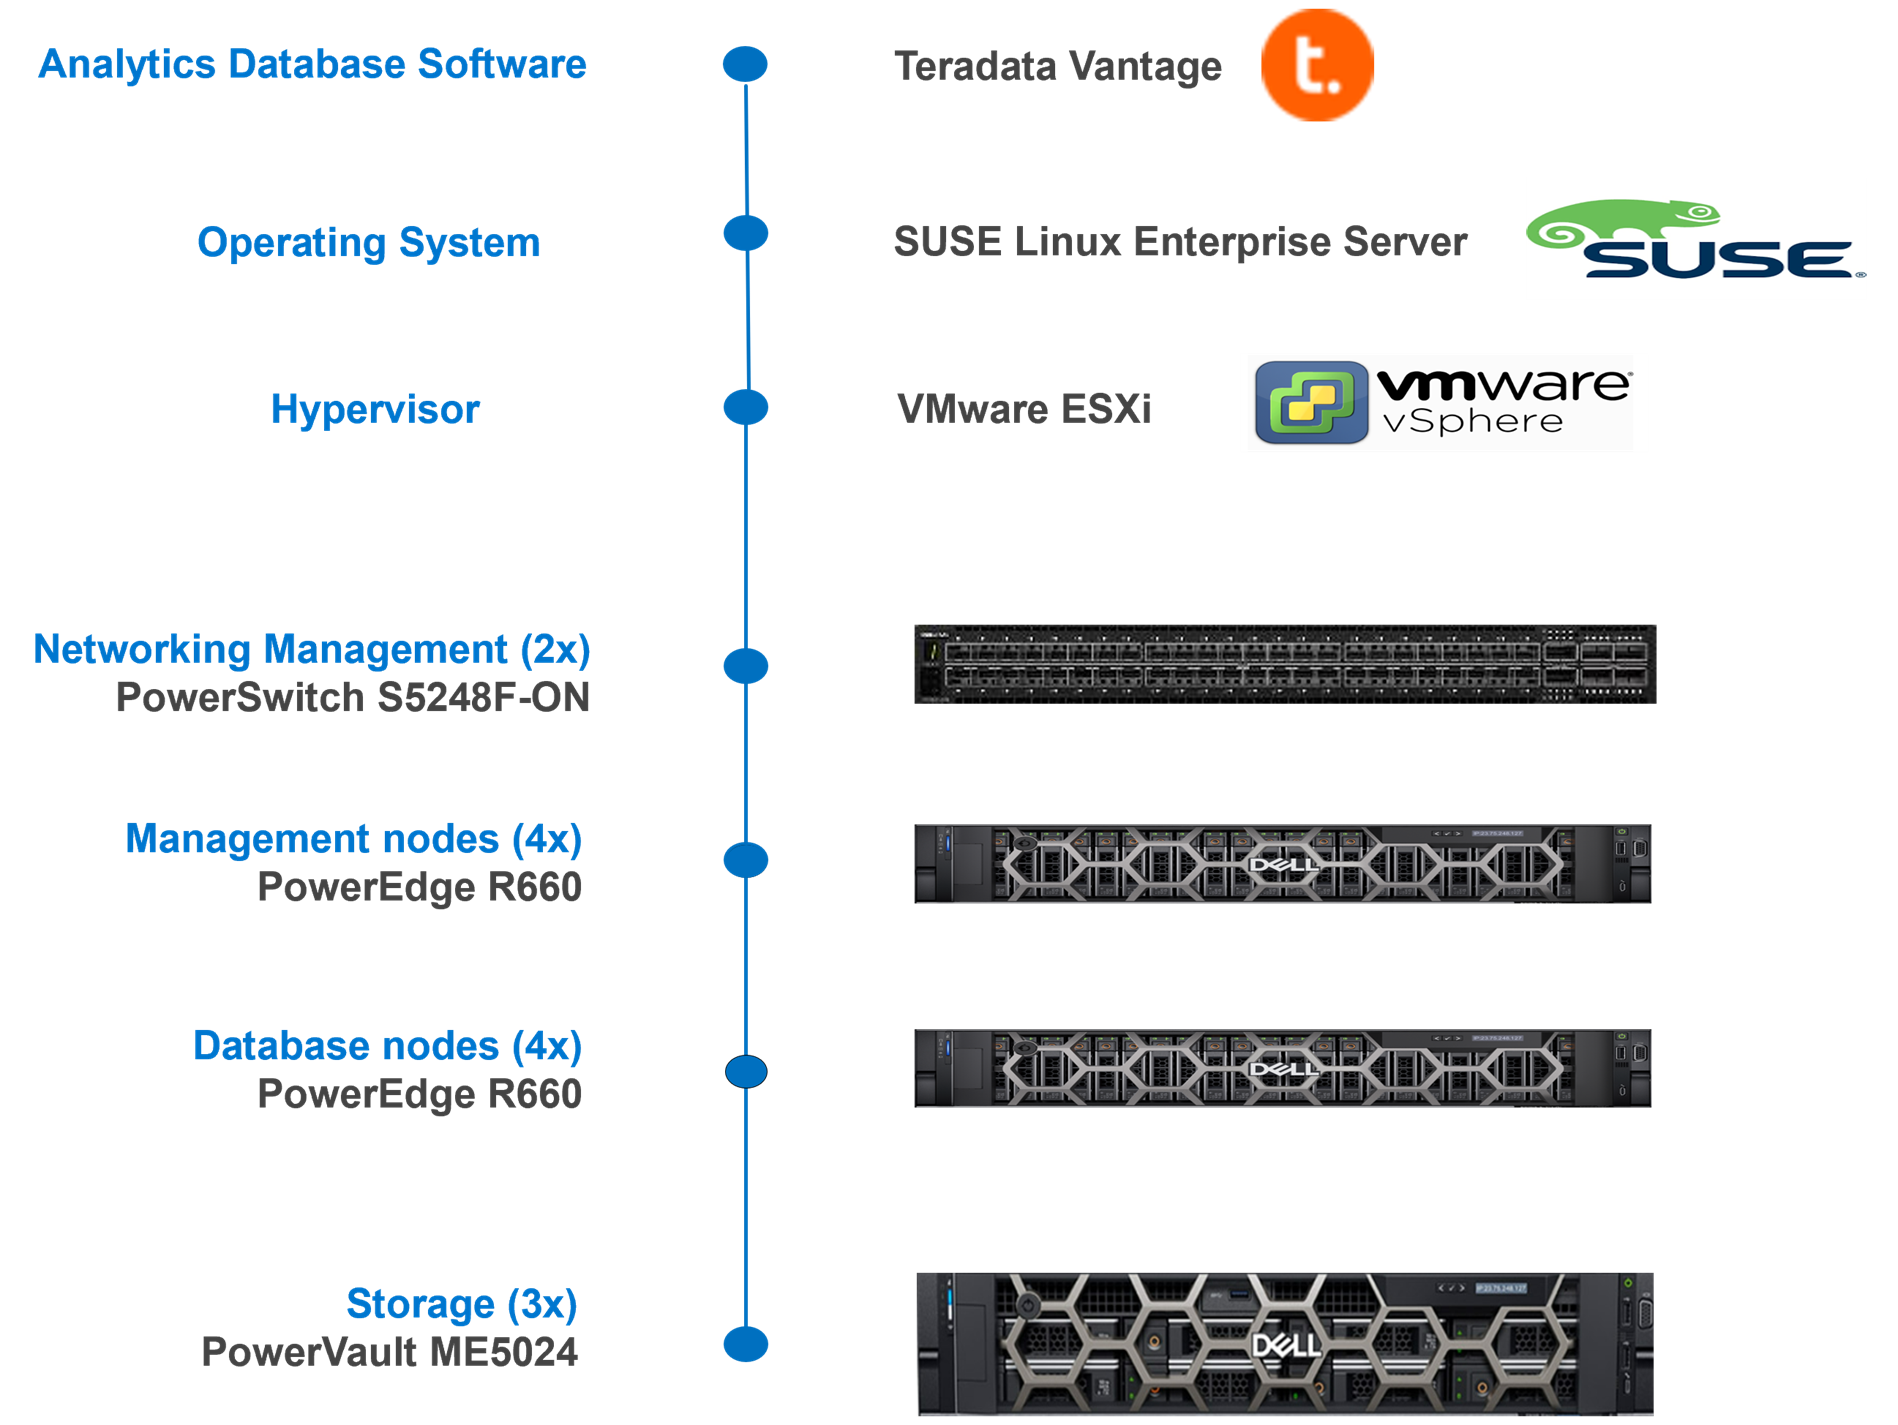 This figure shows the Teradata VantageCore Enterprise Data Warehouse solution stack.